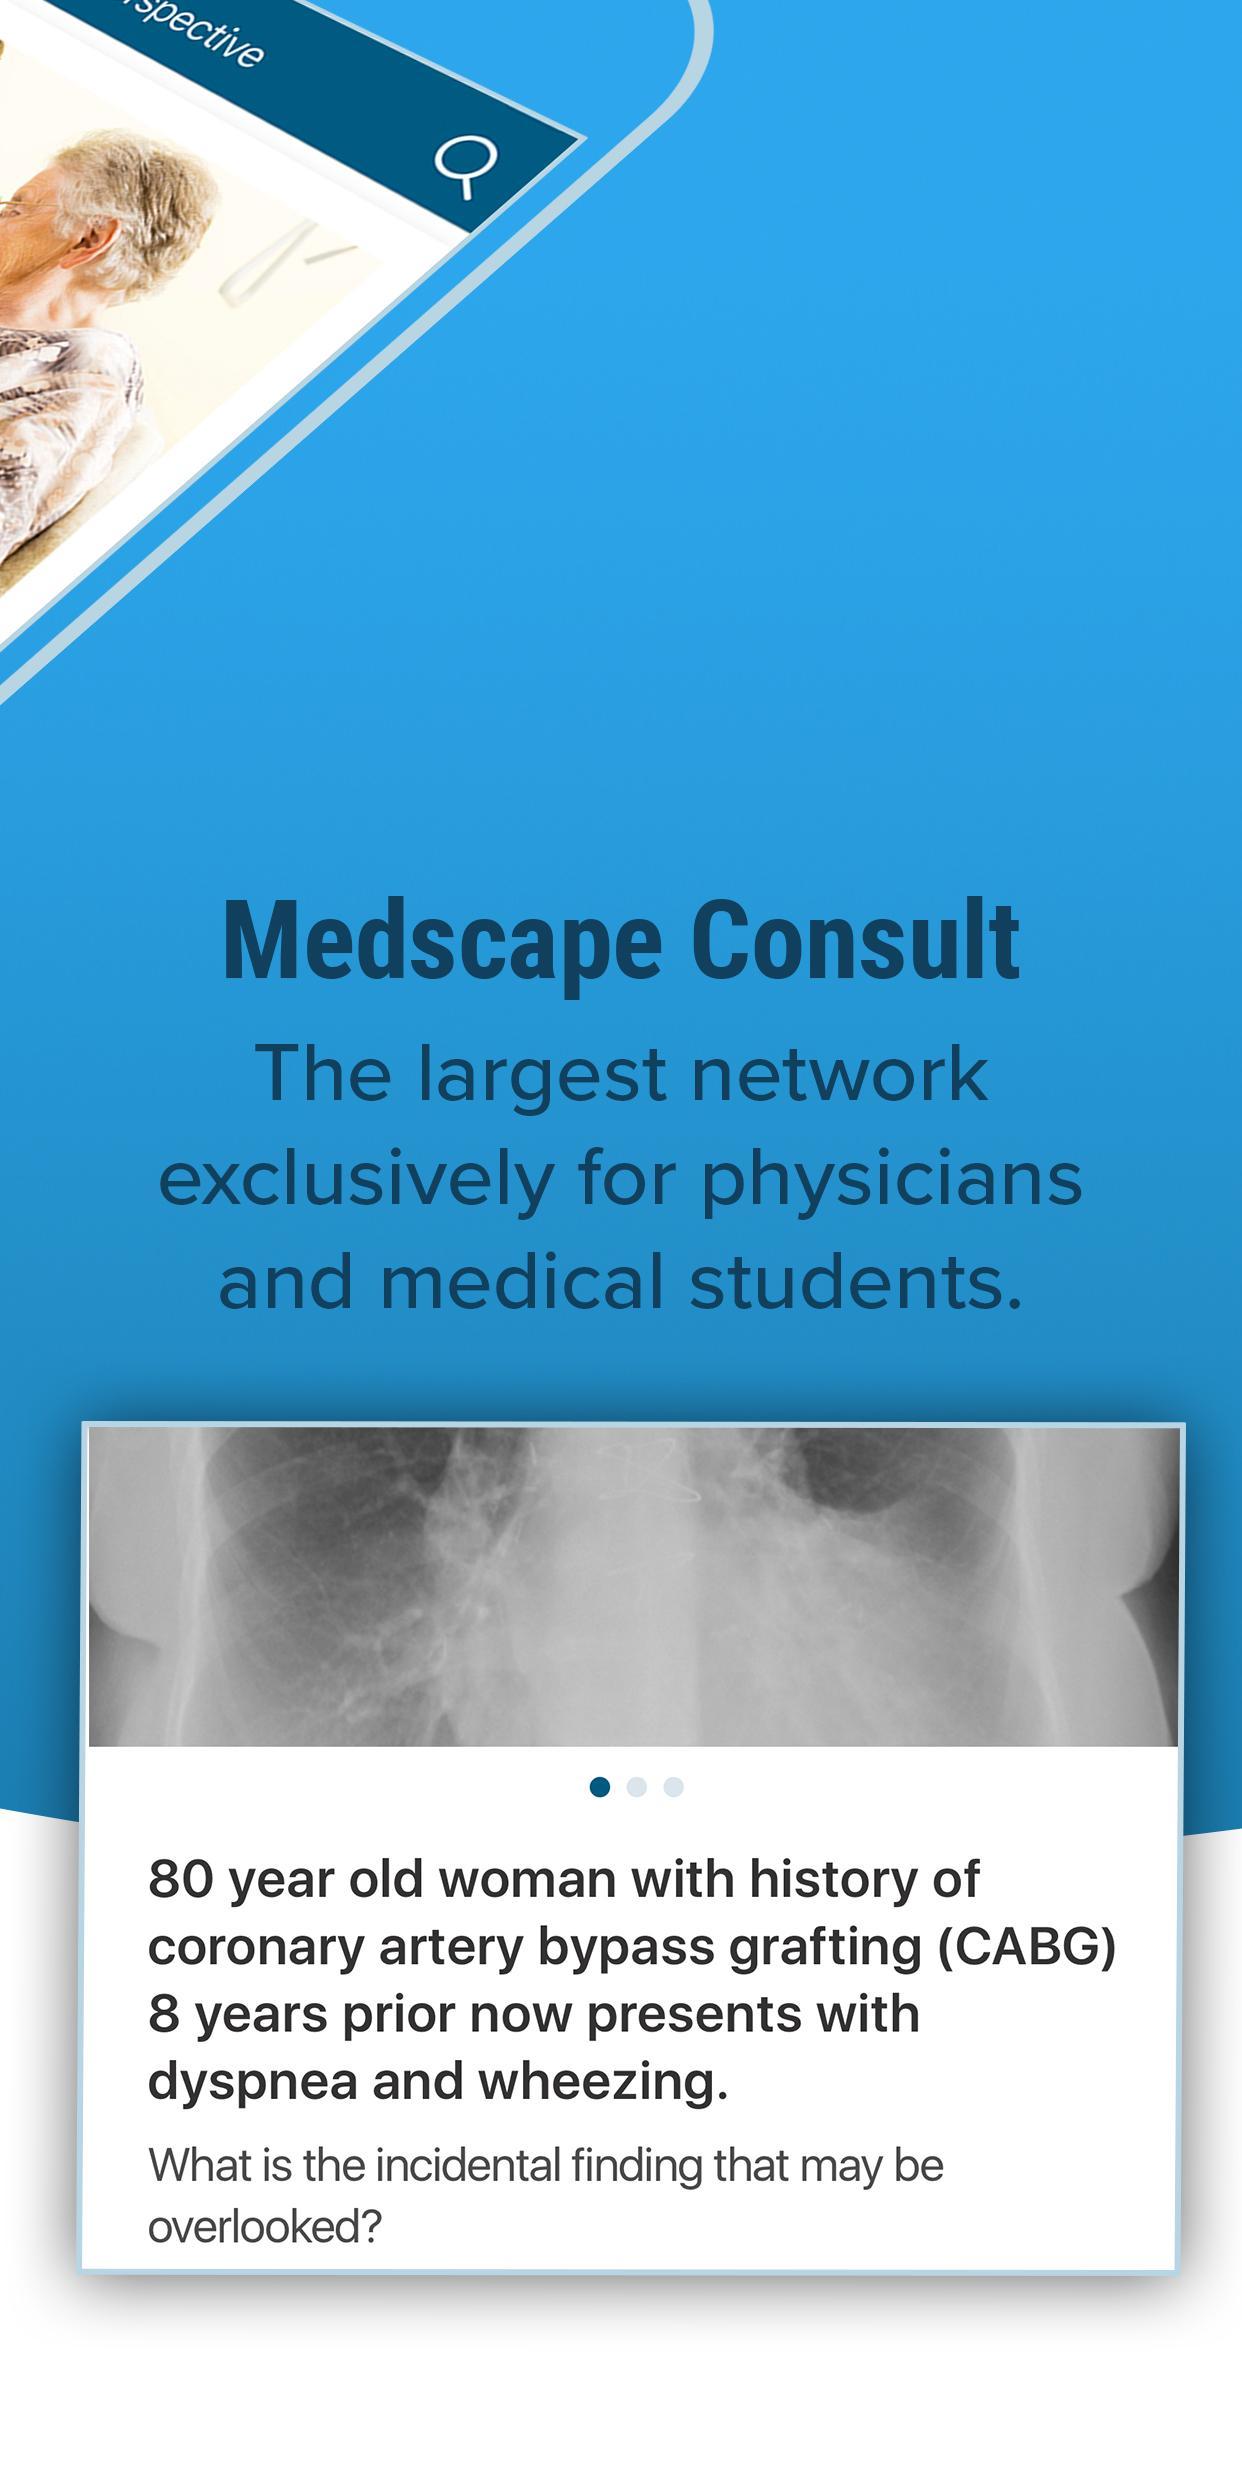 medscape app free download for android